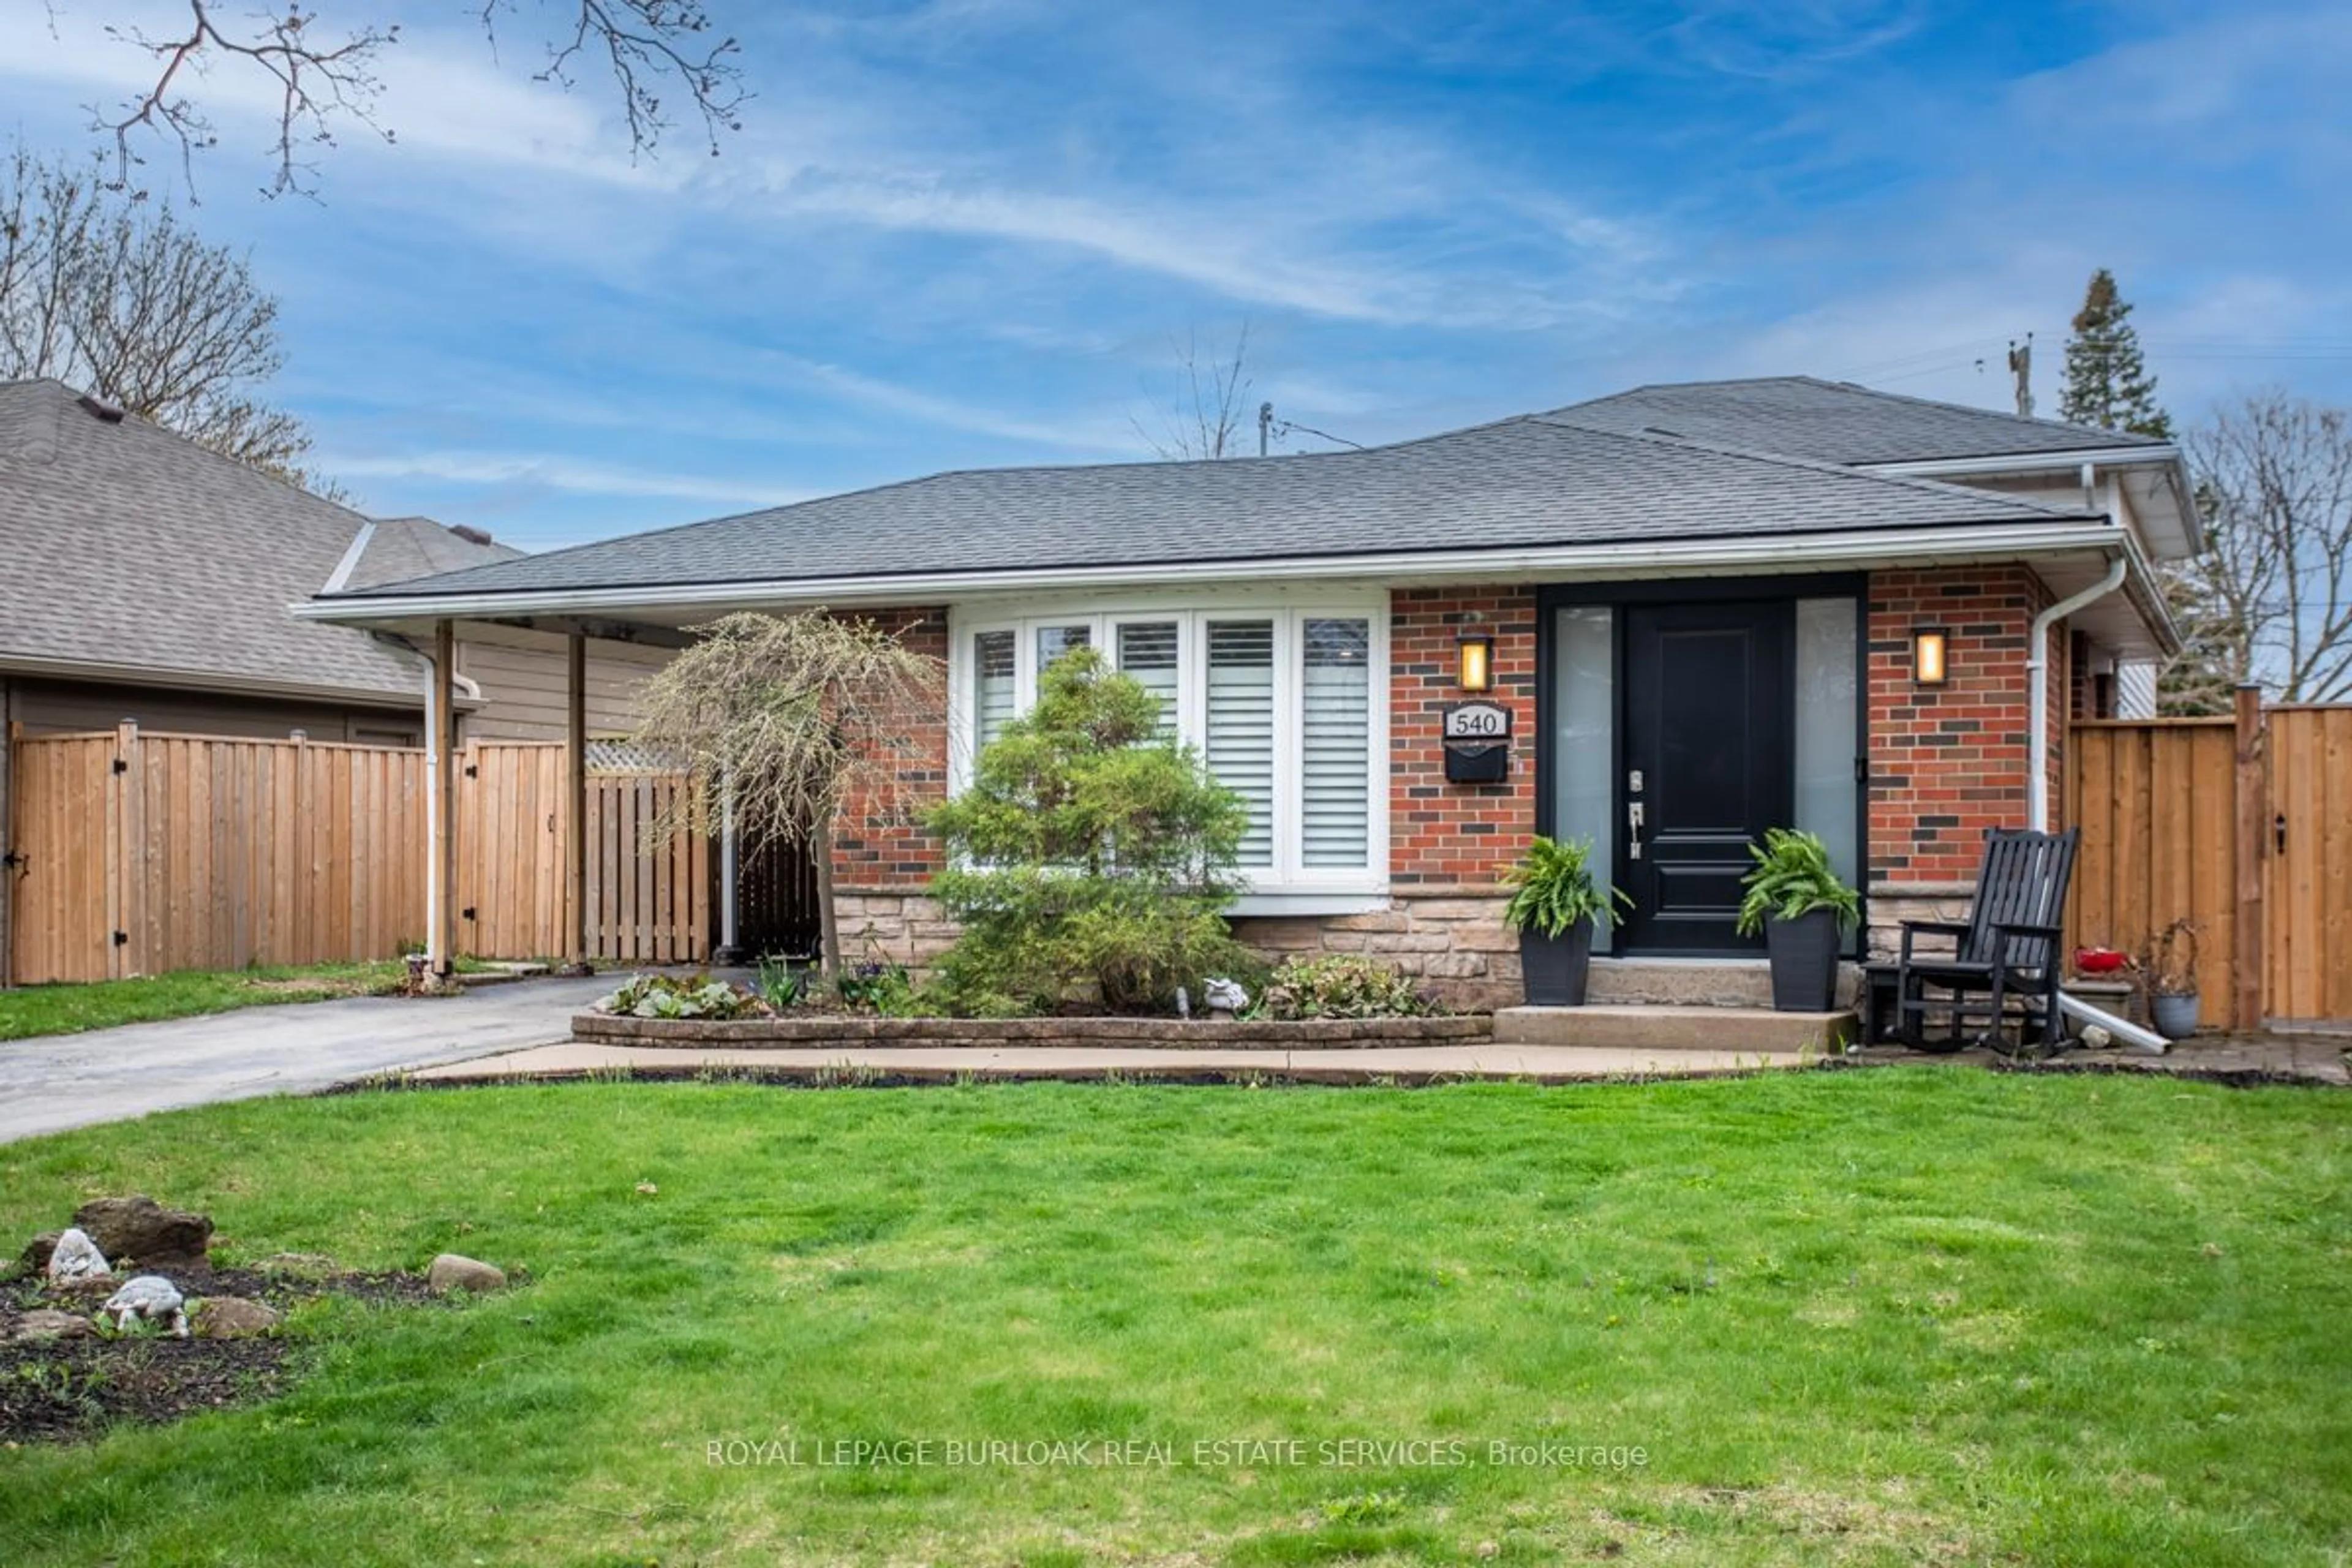 Home with brick exterior material for 540 Kenmarr Cres, Burlington Ontario L7L 4R7